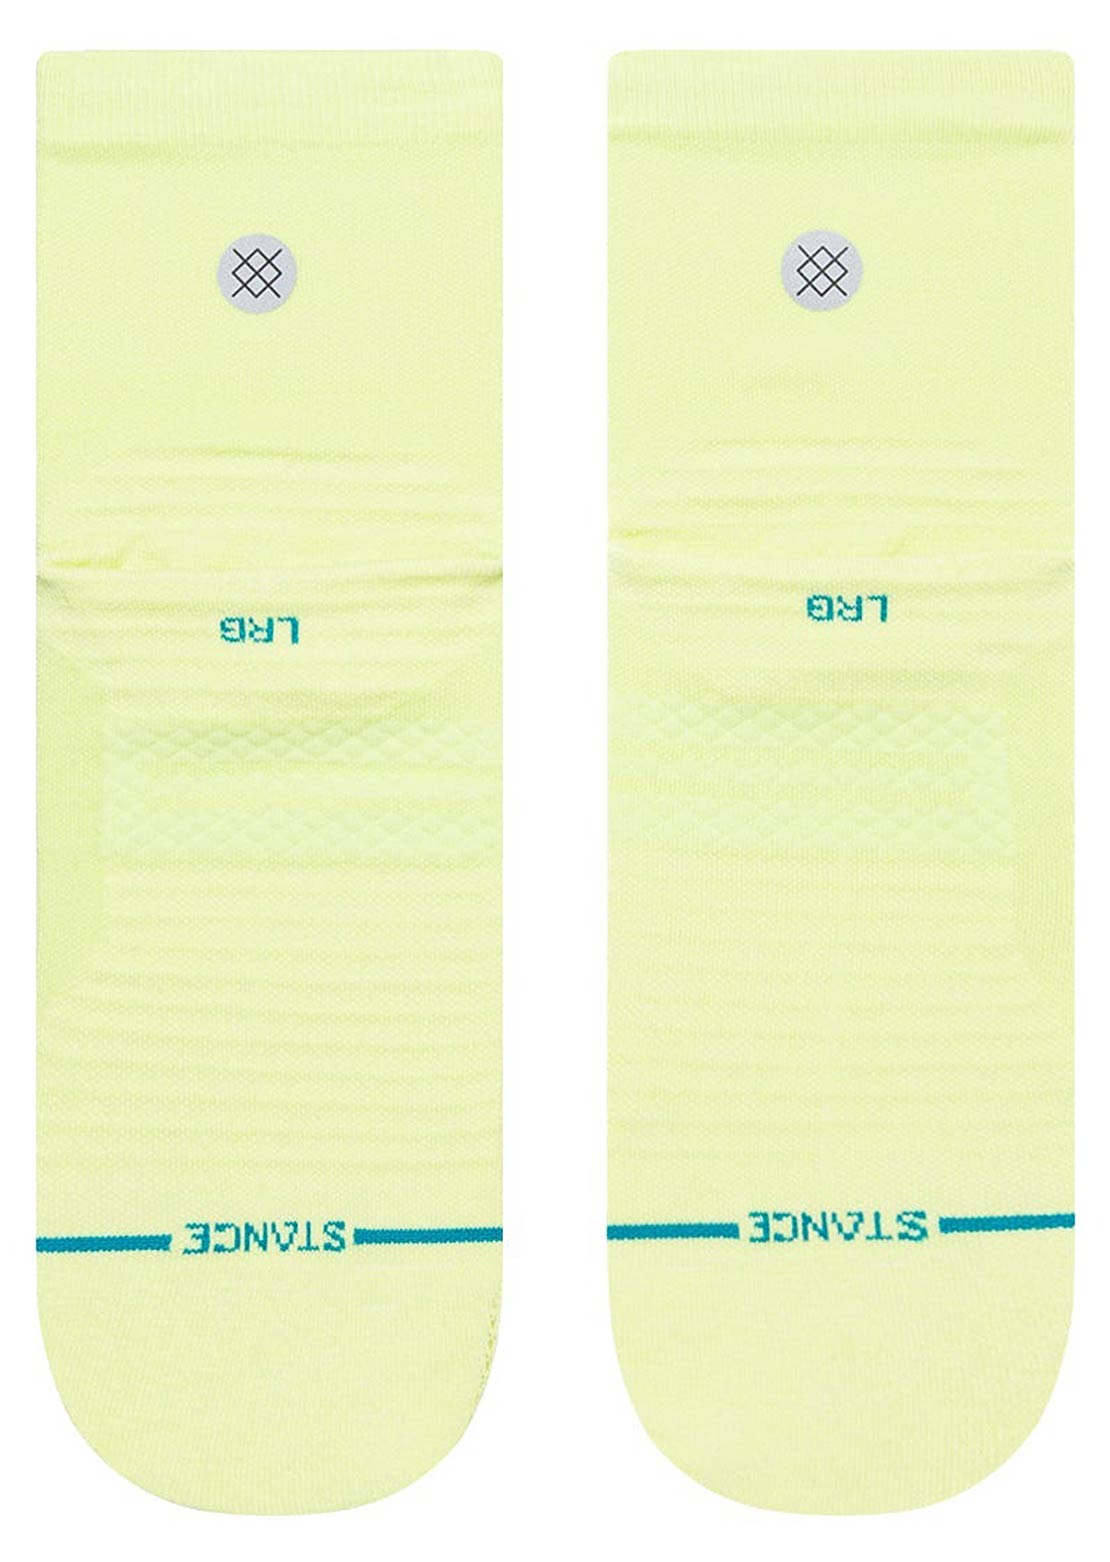 Stance Unisex Run Nocturnal Ultralight Quarter Sock